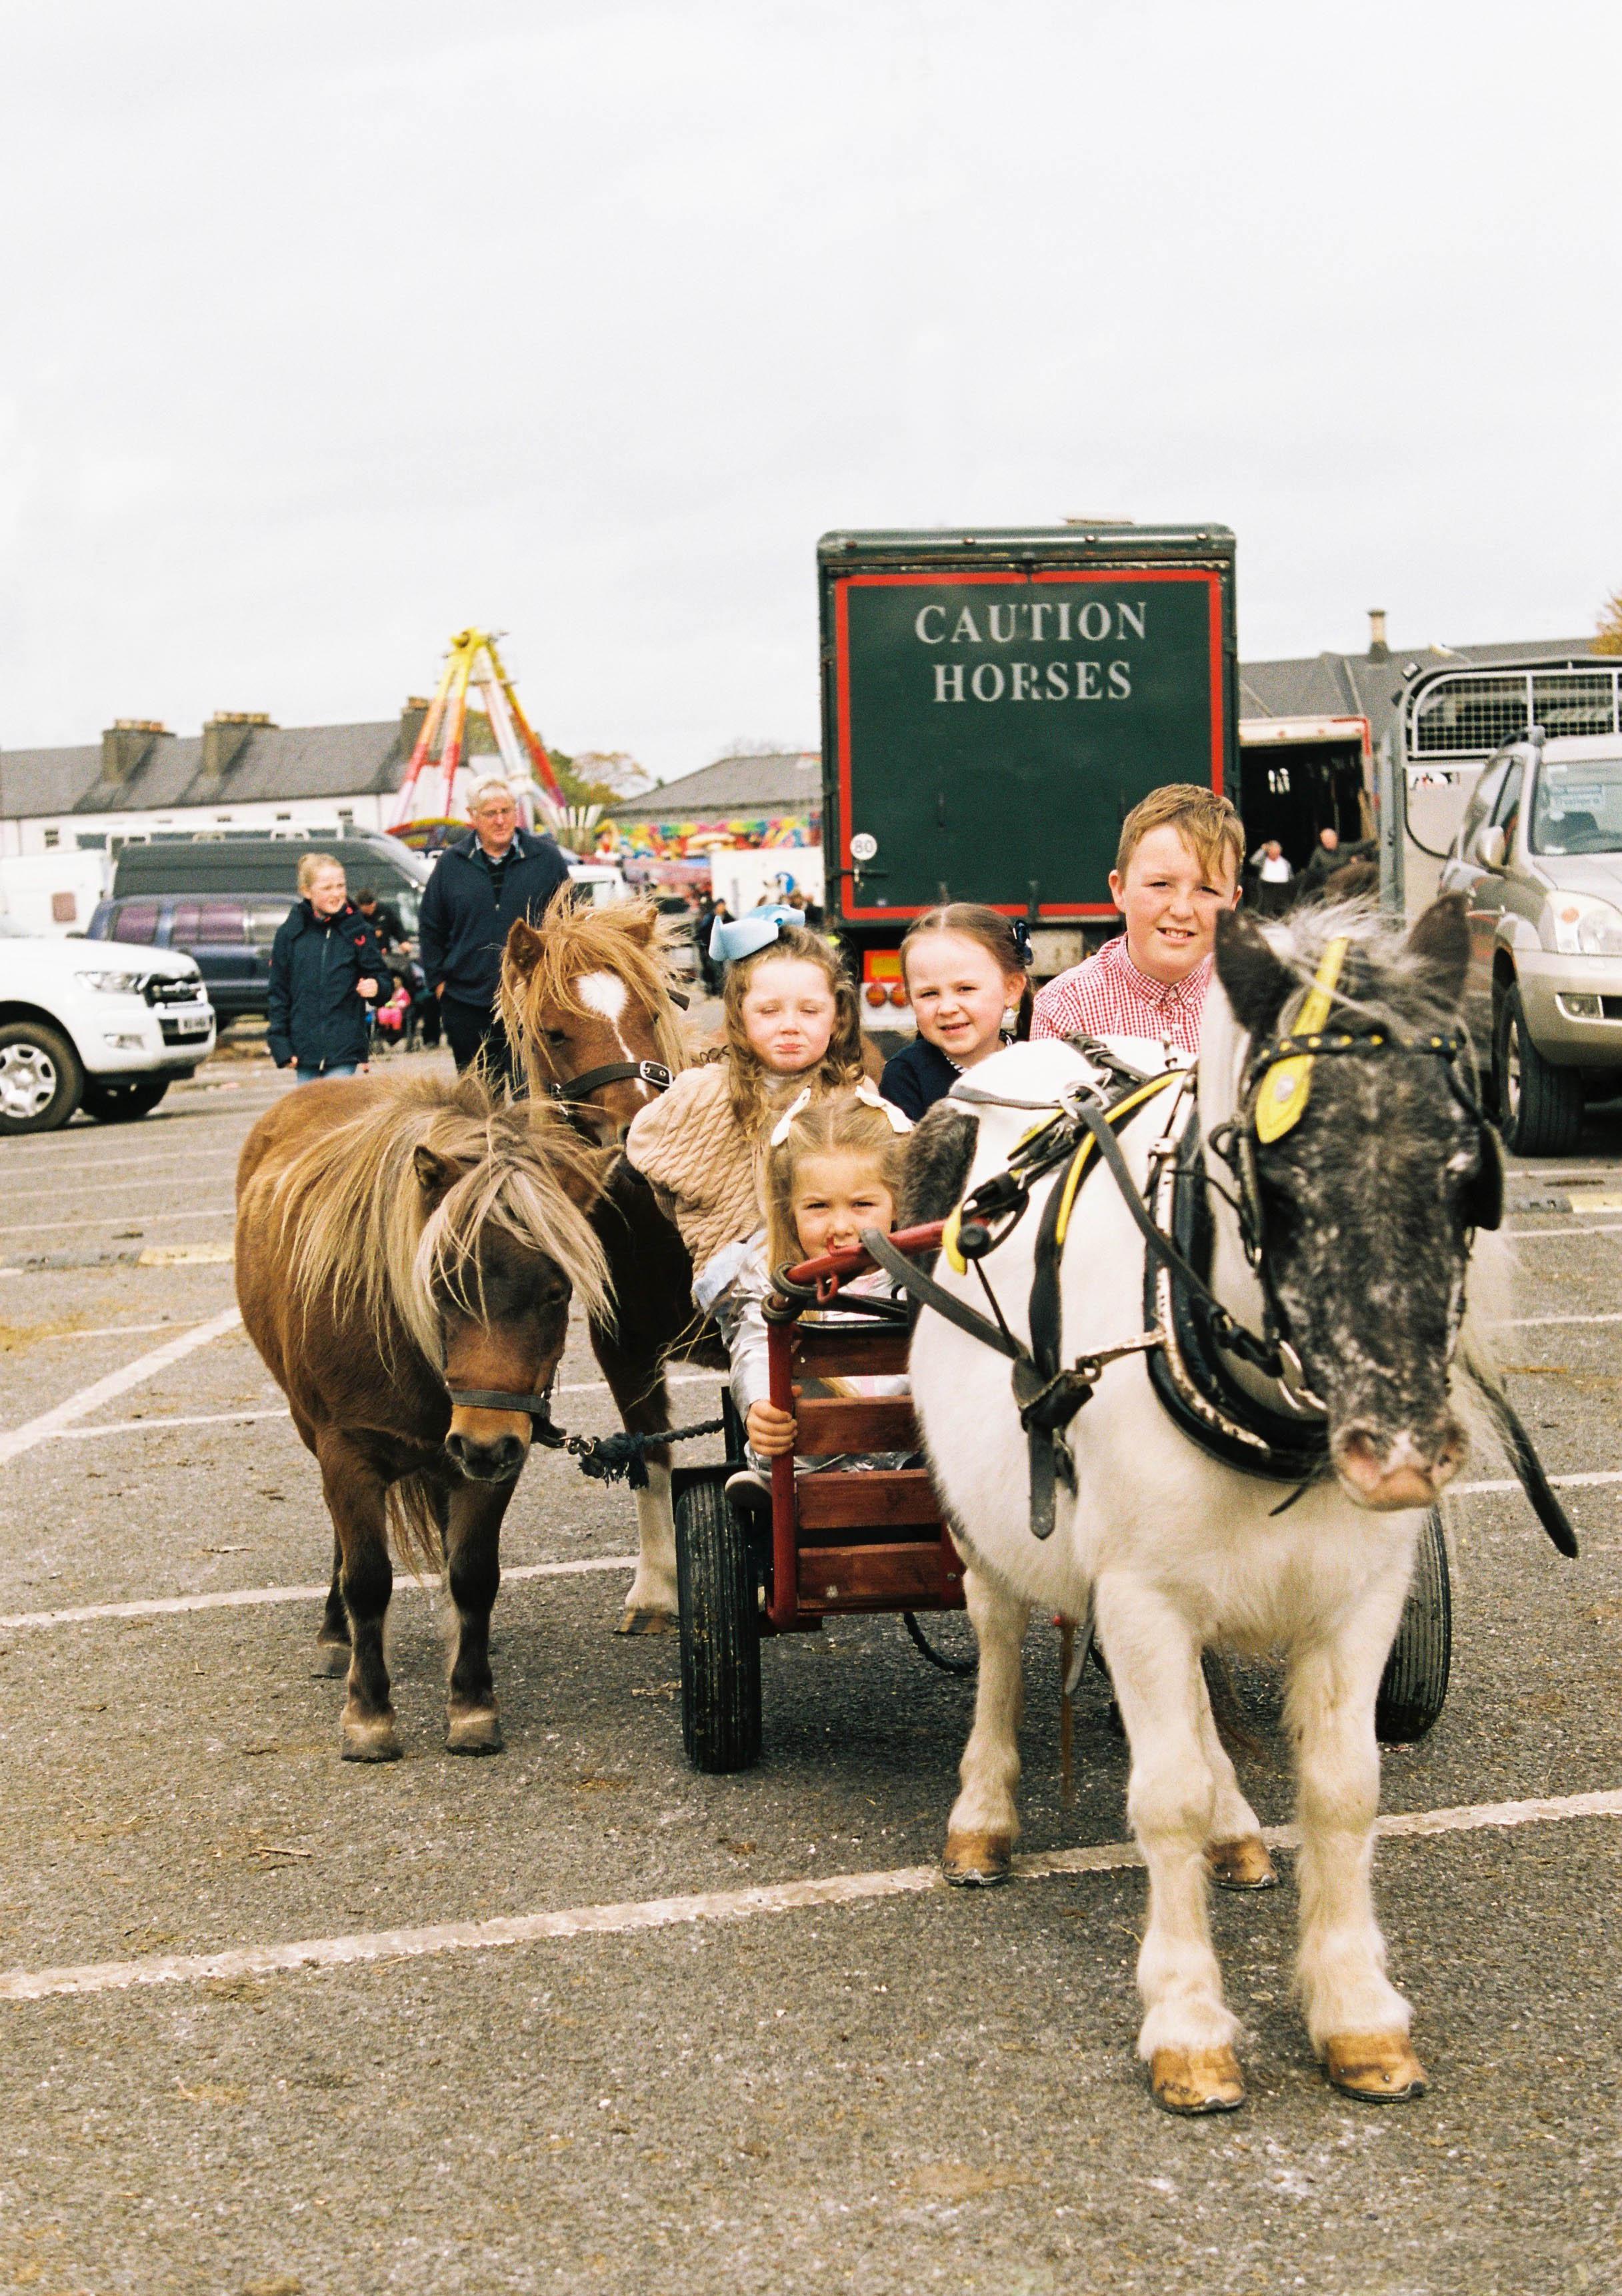 Marion Bergin Animal Print - Irish Traveller Children and Horse - Ballinasloe Horse Fair, Ireland, 2018